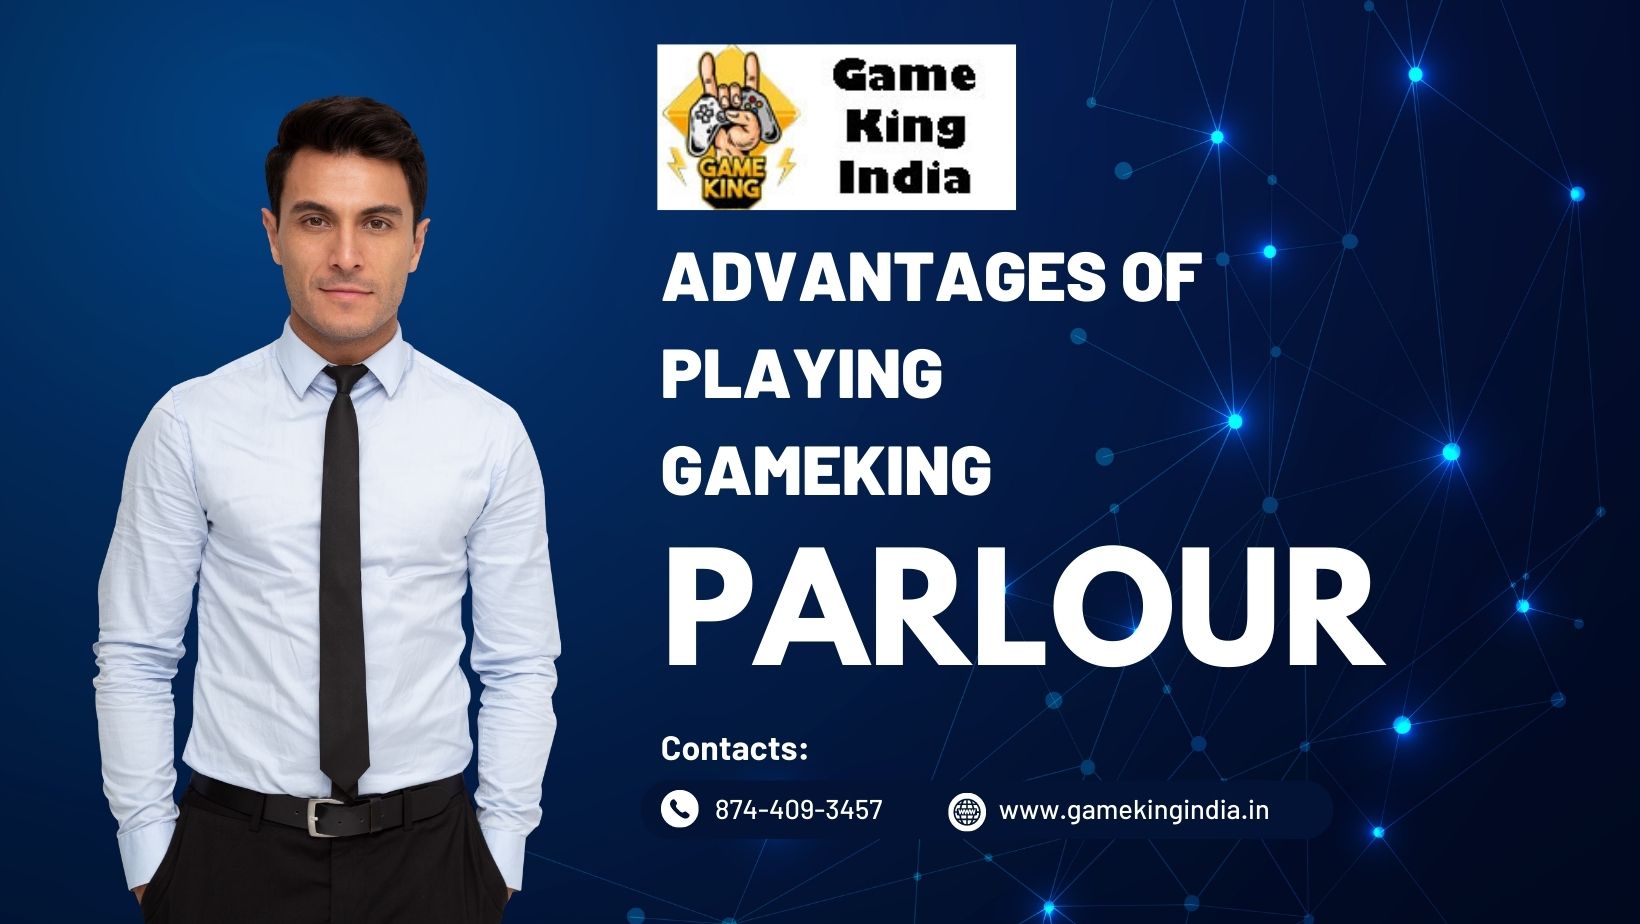 Gameking Parlour